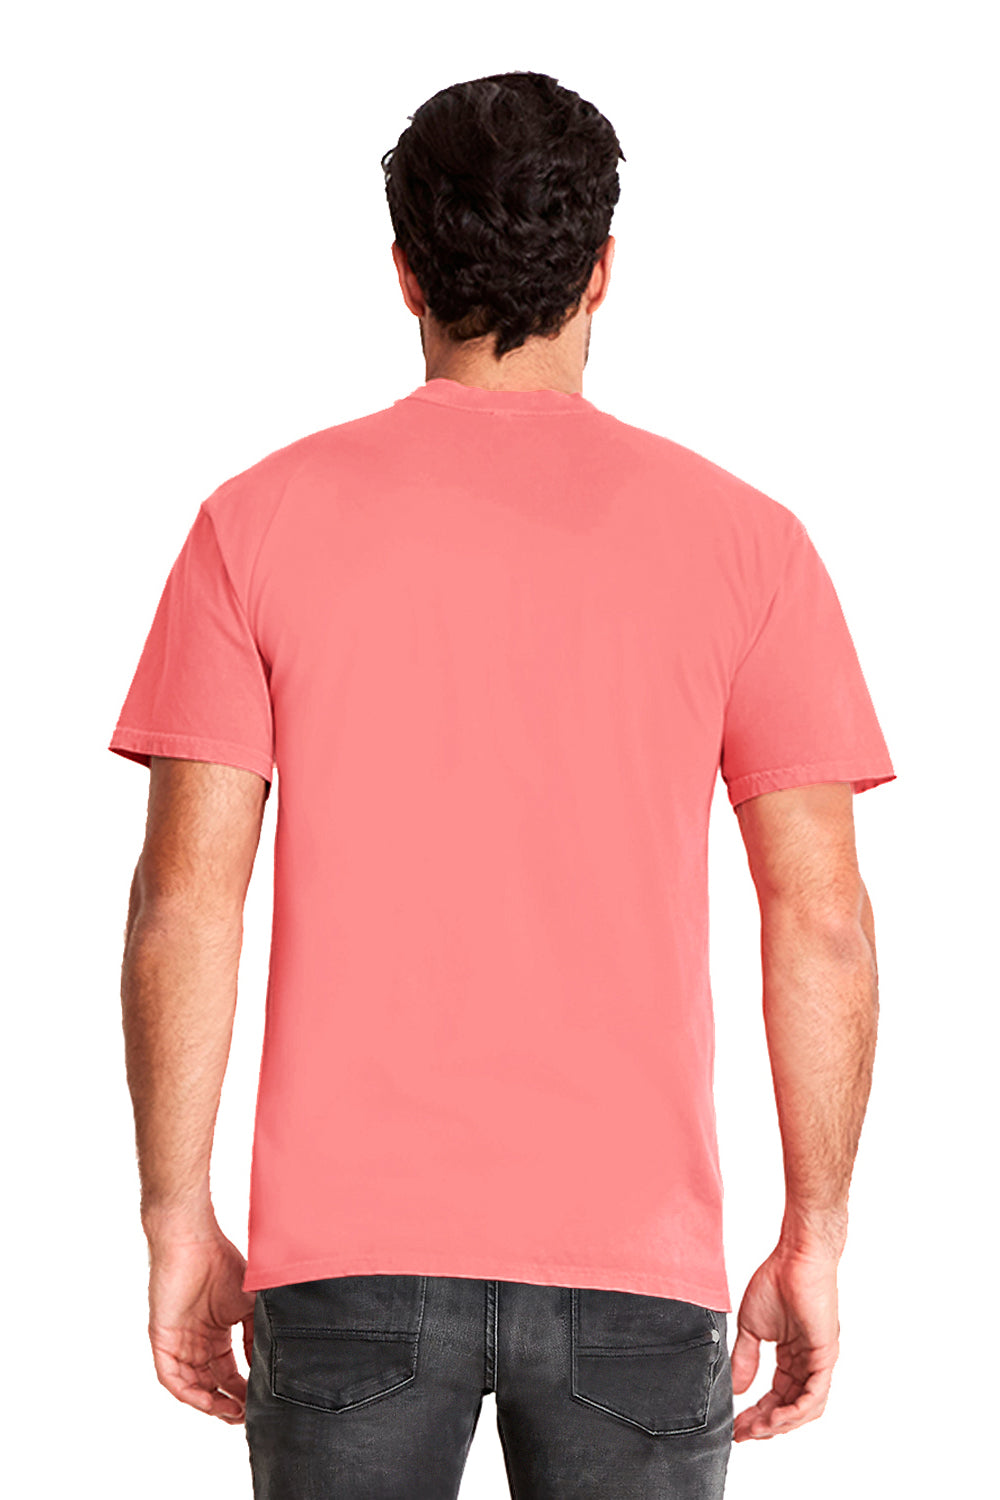 Next Level 7415 Mens Inspired Dye Jersey Short Sleeve Crewneck T-Shirt w/ Pocket Pink Guava Back